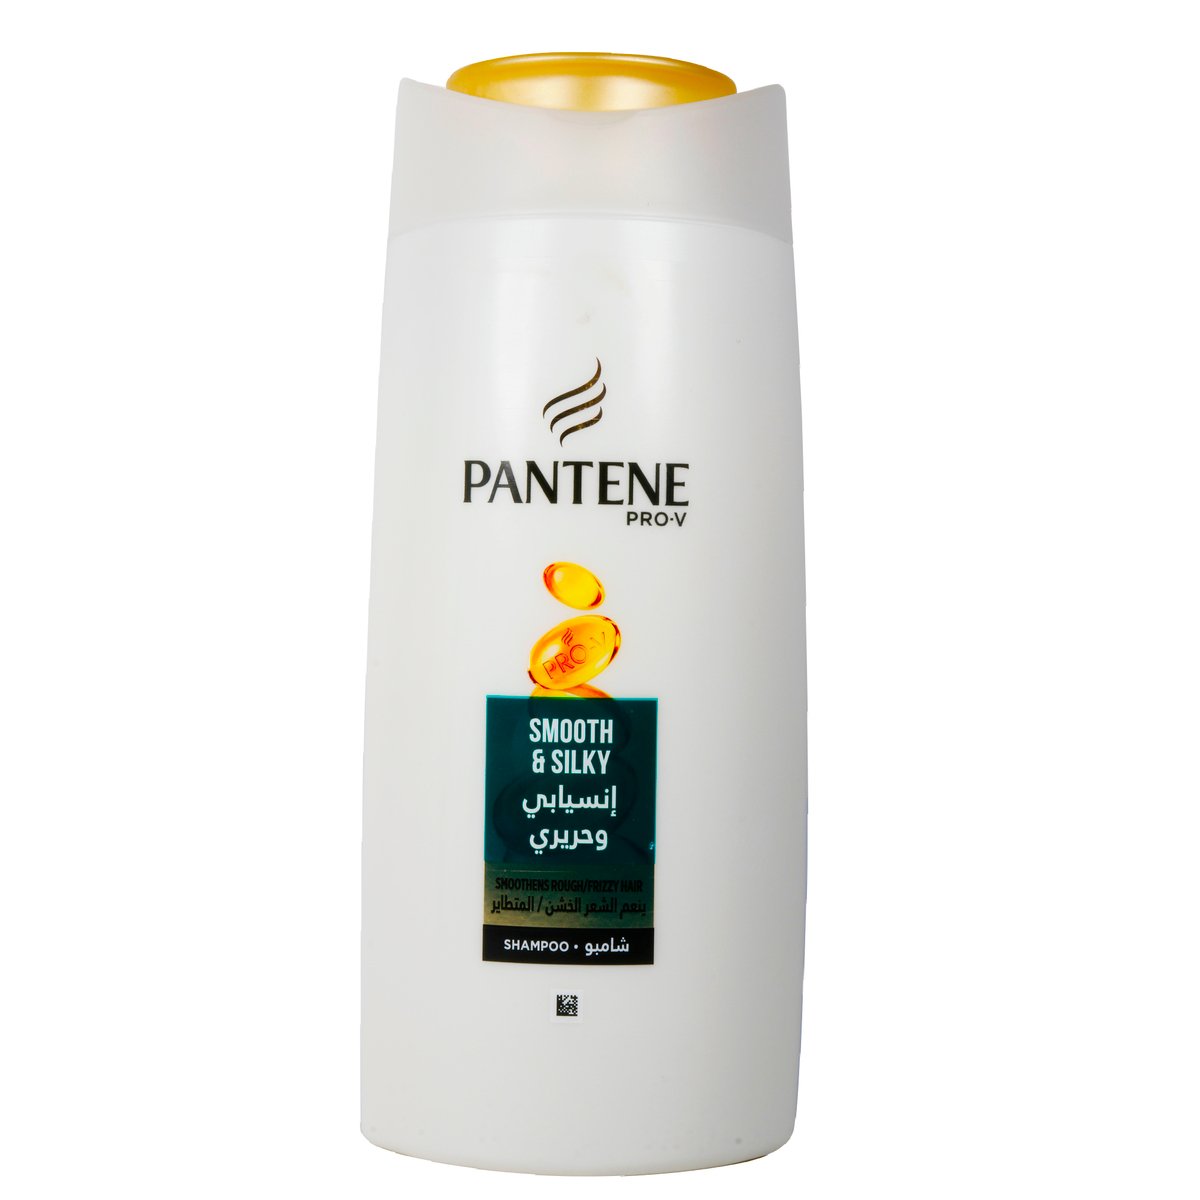 Pantene Shampoo Smooth & Silky 700ml